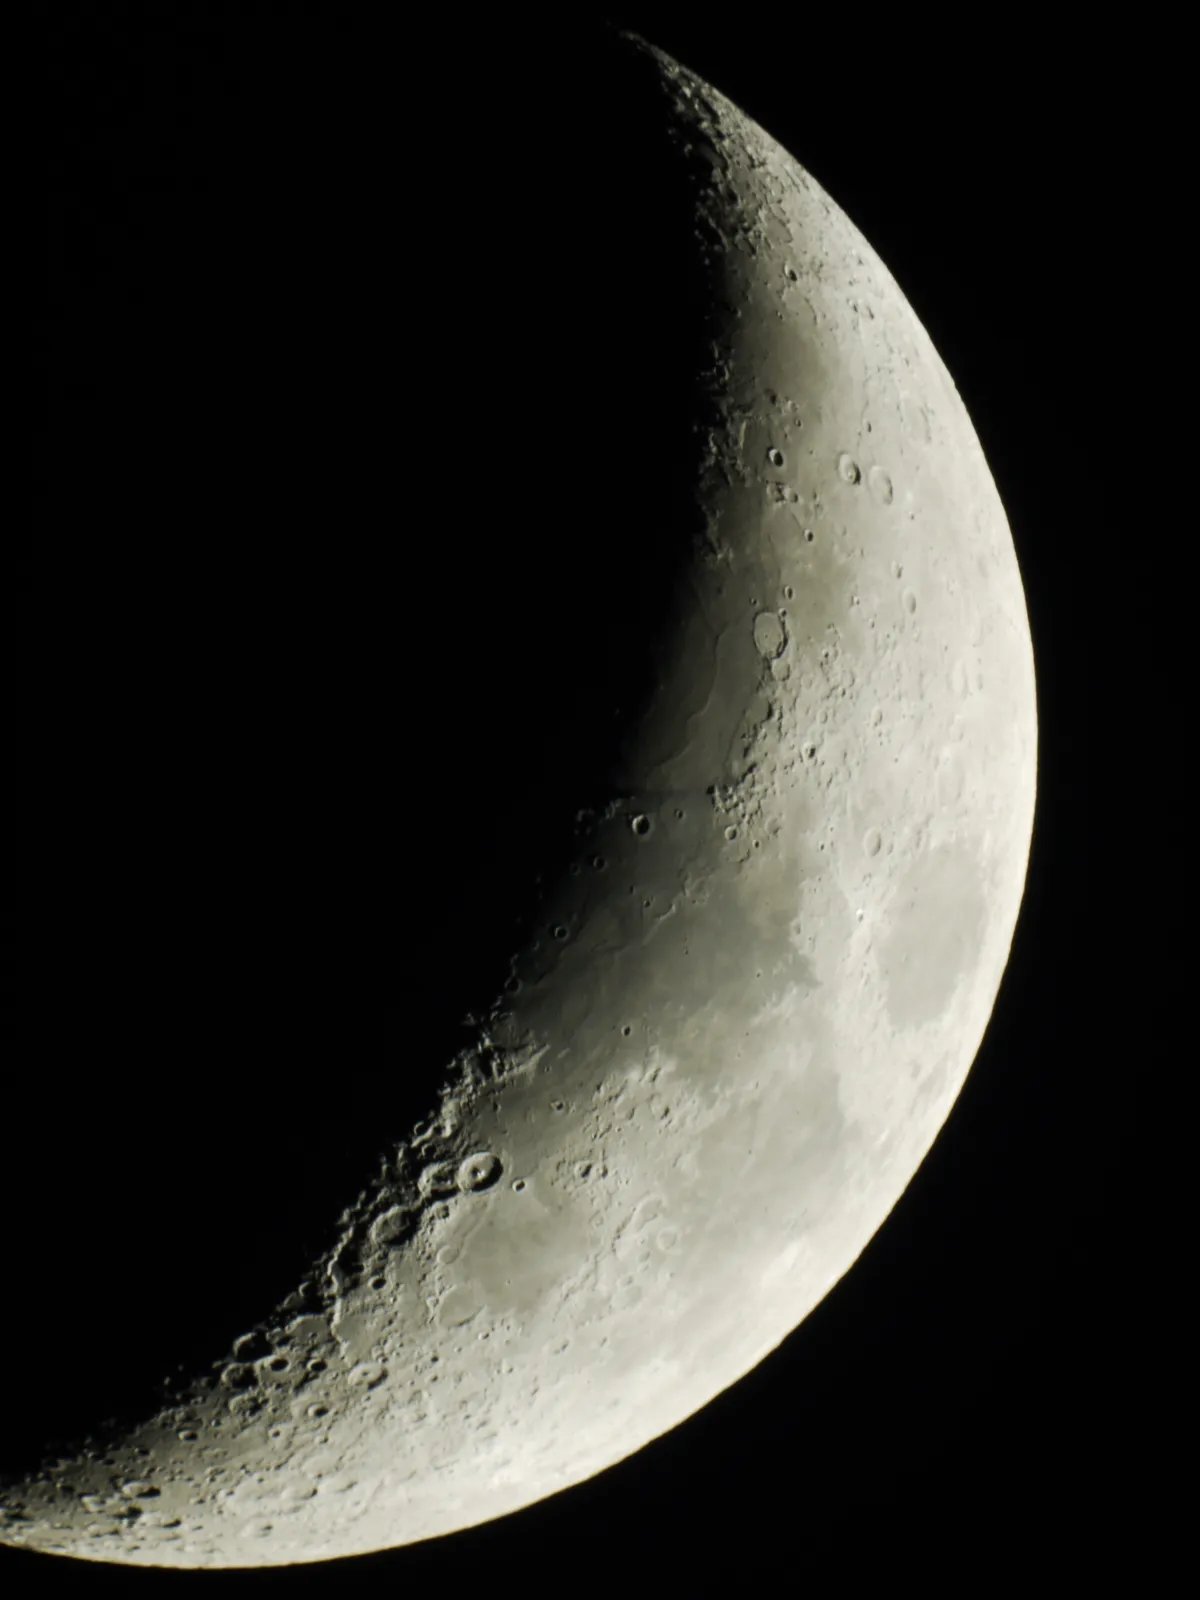 Moon by Tony Moss, Downham Market, Norfolk. Equipment: Tal 200k Telescope, G2 Lumix Camera, GTA Goto Mount, Homemade Wooden Pier